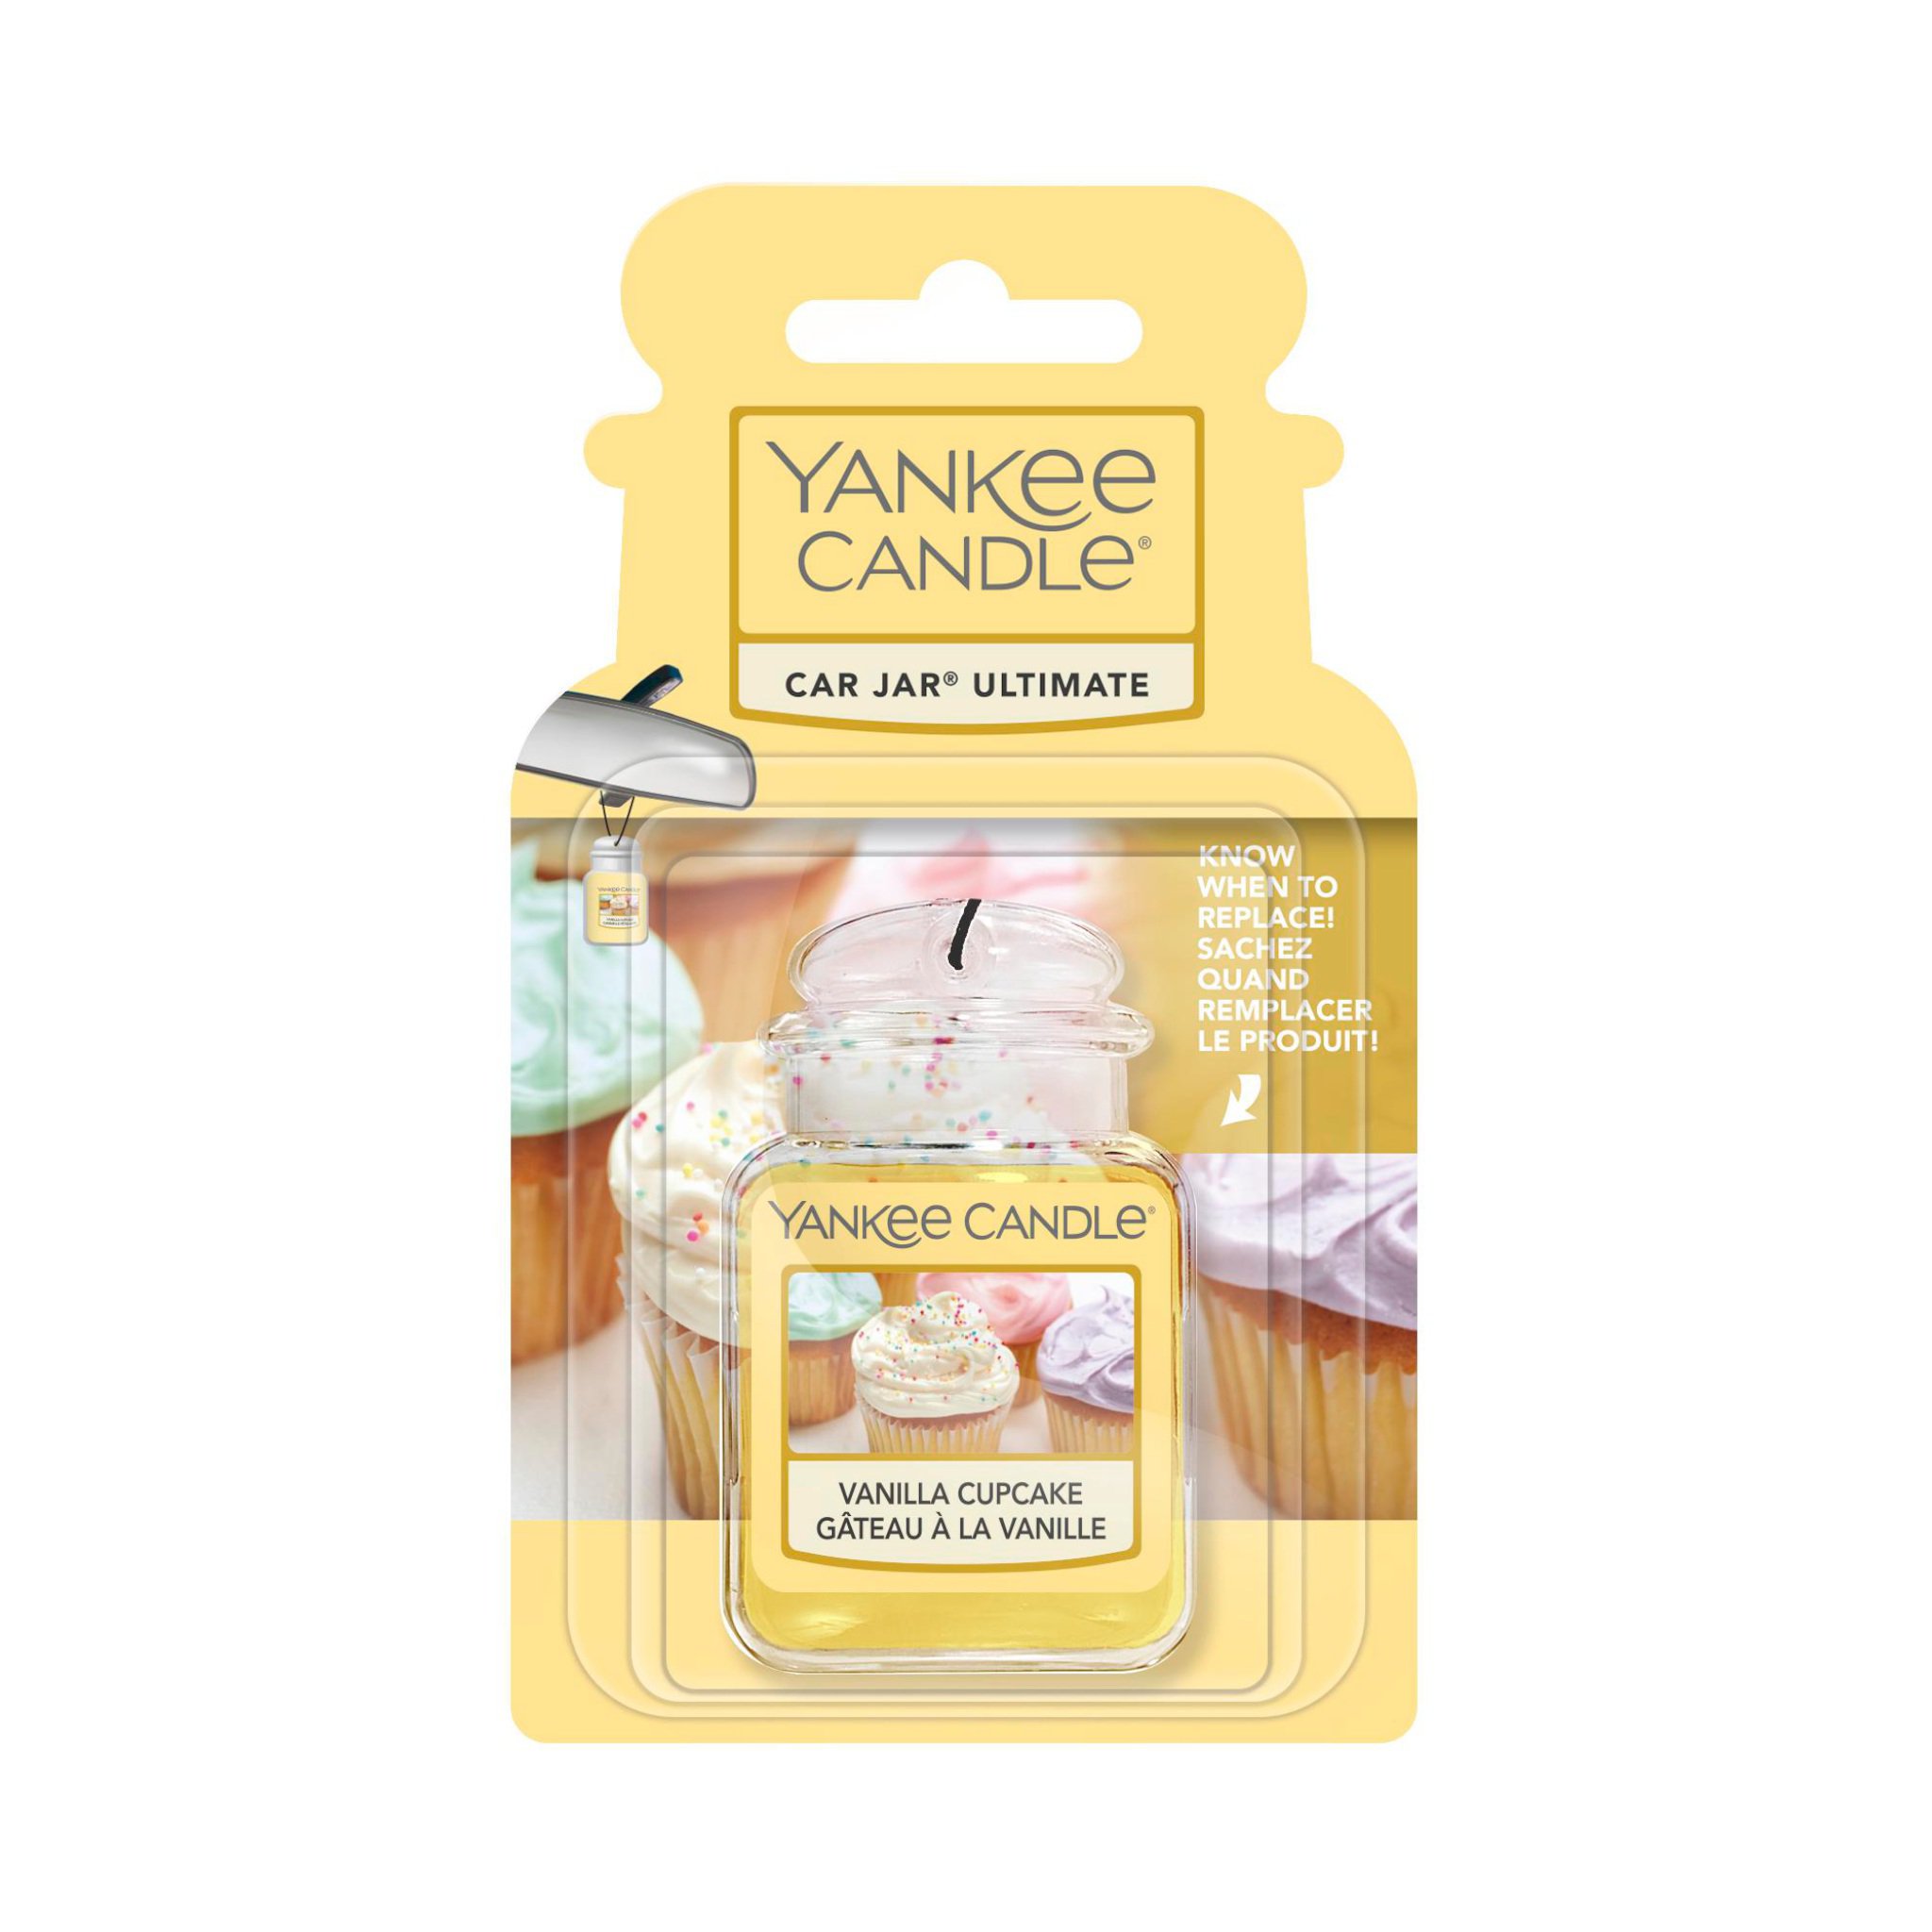 Yankee Candle Sent-bon pour voiture Vanilla Cupcake Car Jar